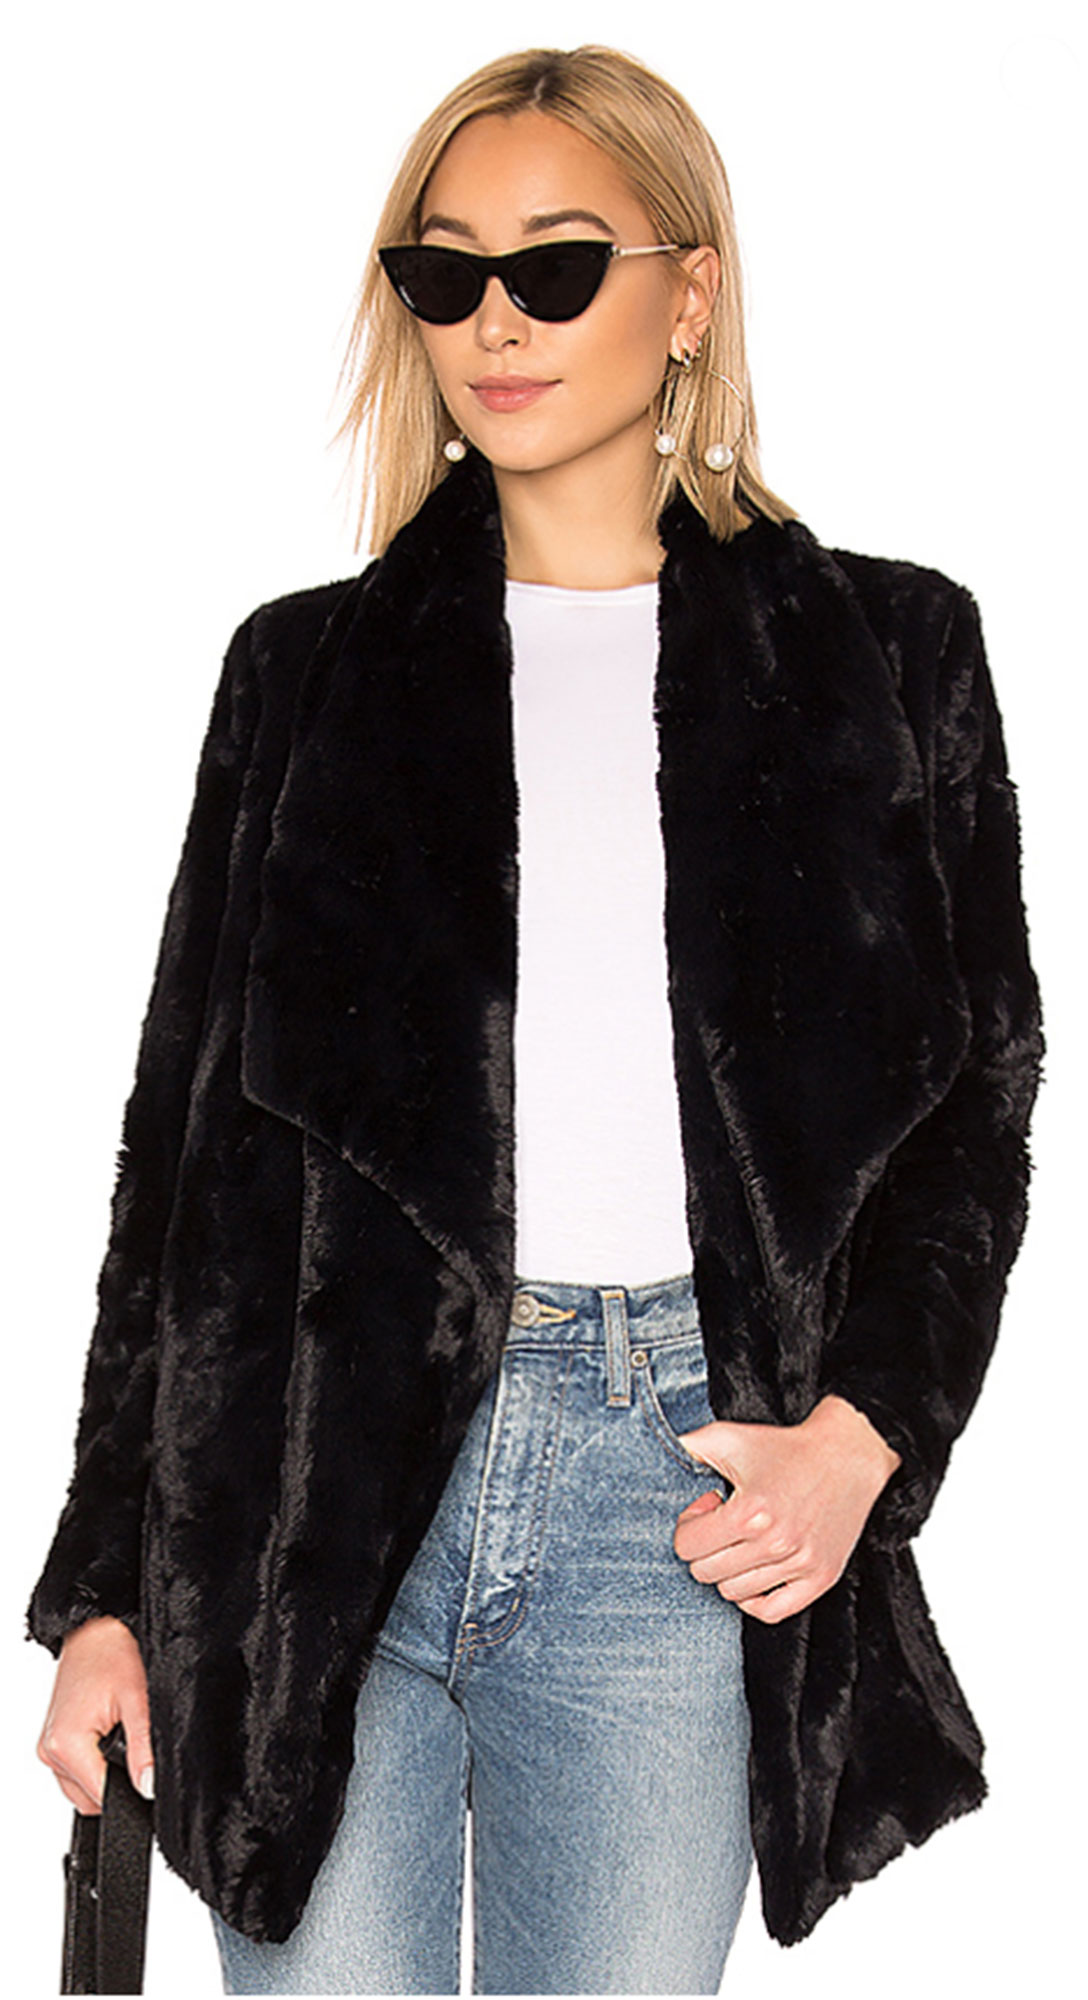 7 Black Faux Fur Midi Coats to Copy Bella Hadid’s Winter Style | Go ...